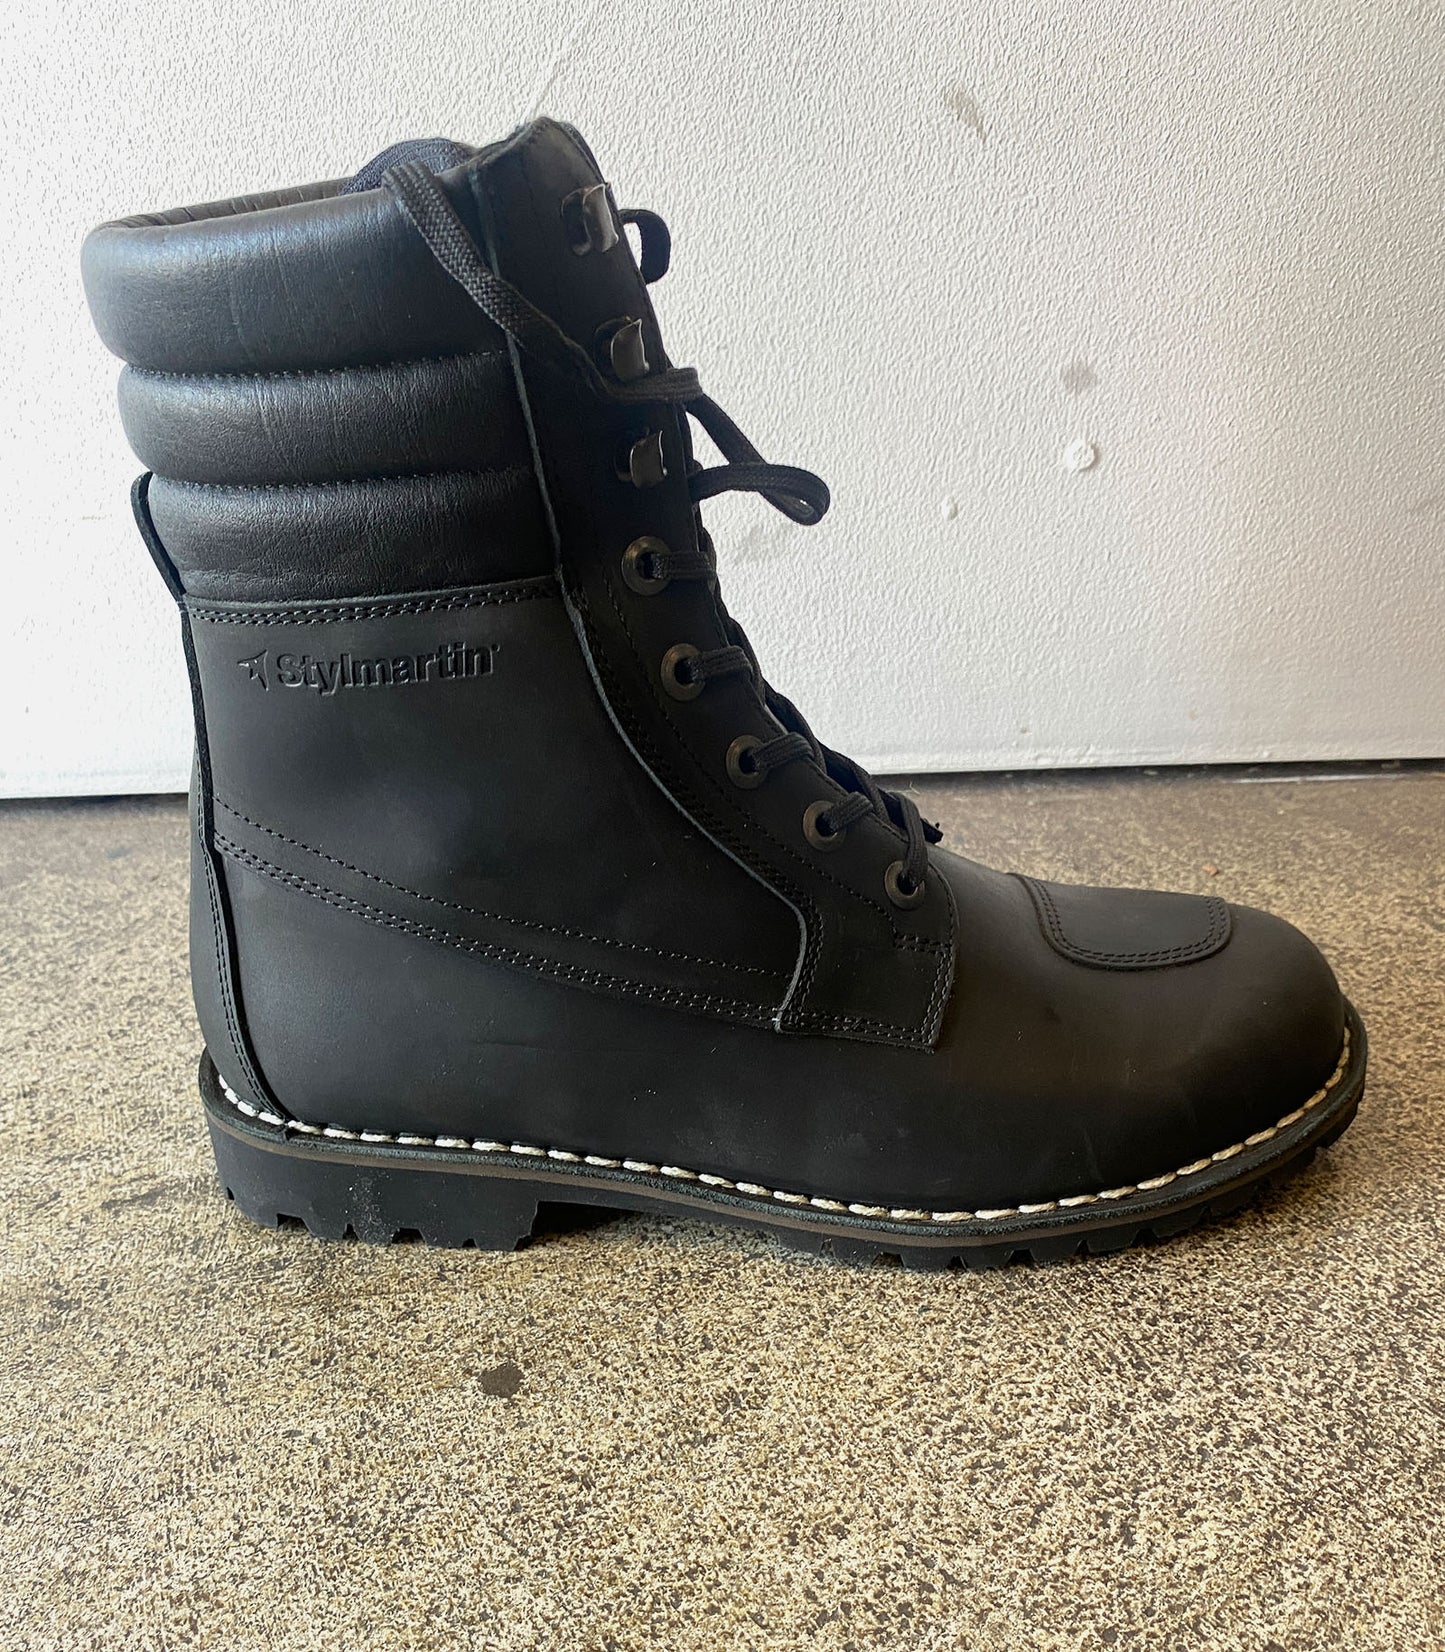 STYLMARTIN Indian Boots - Nero/Black